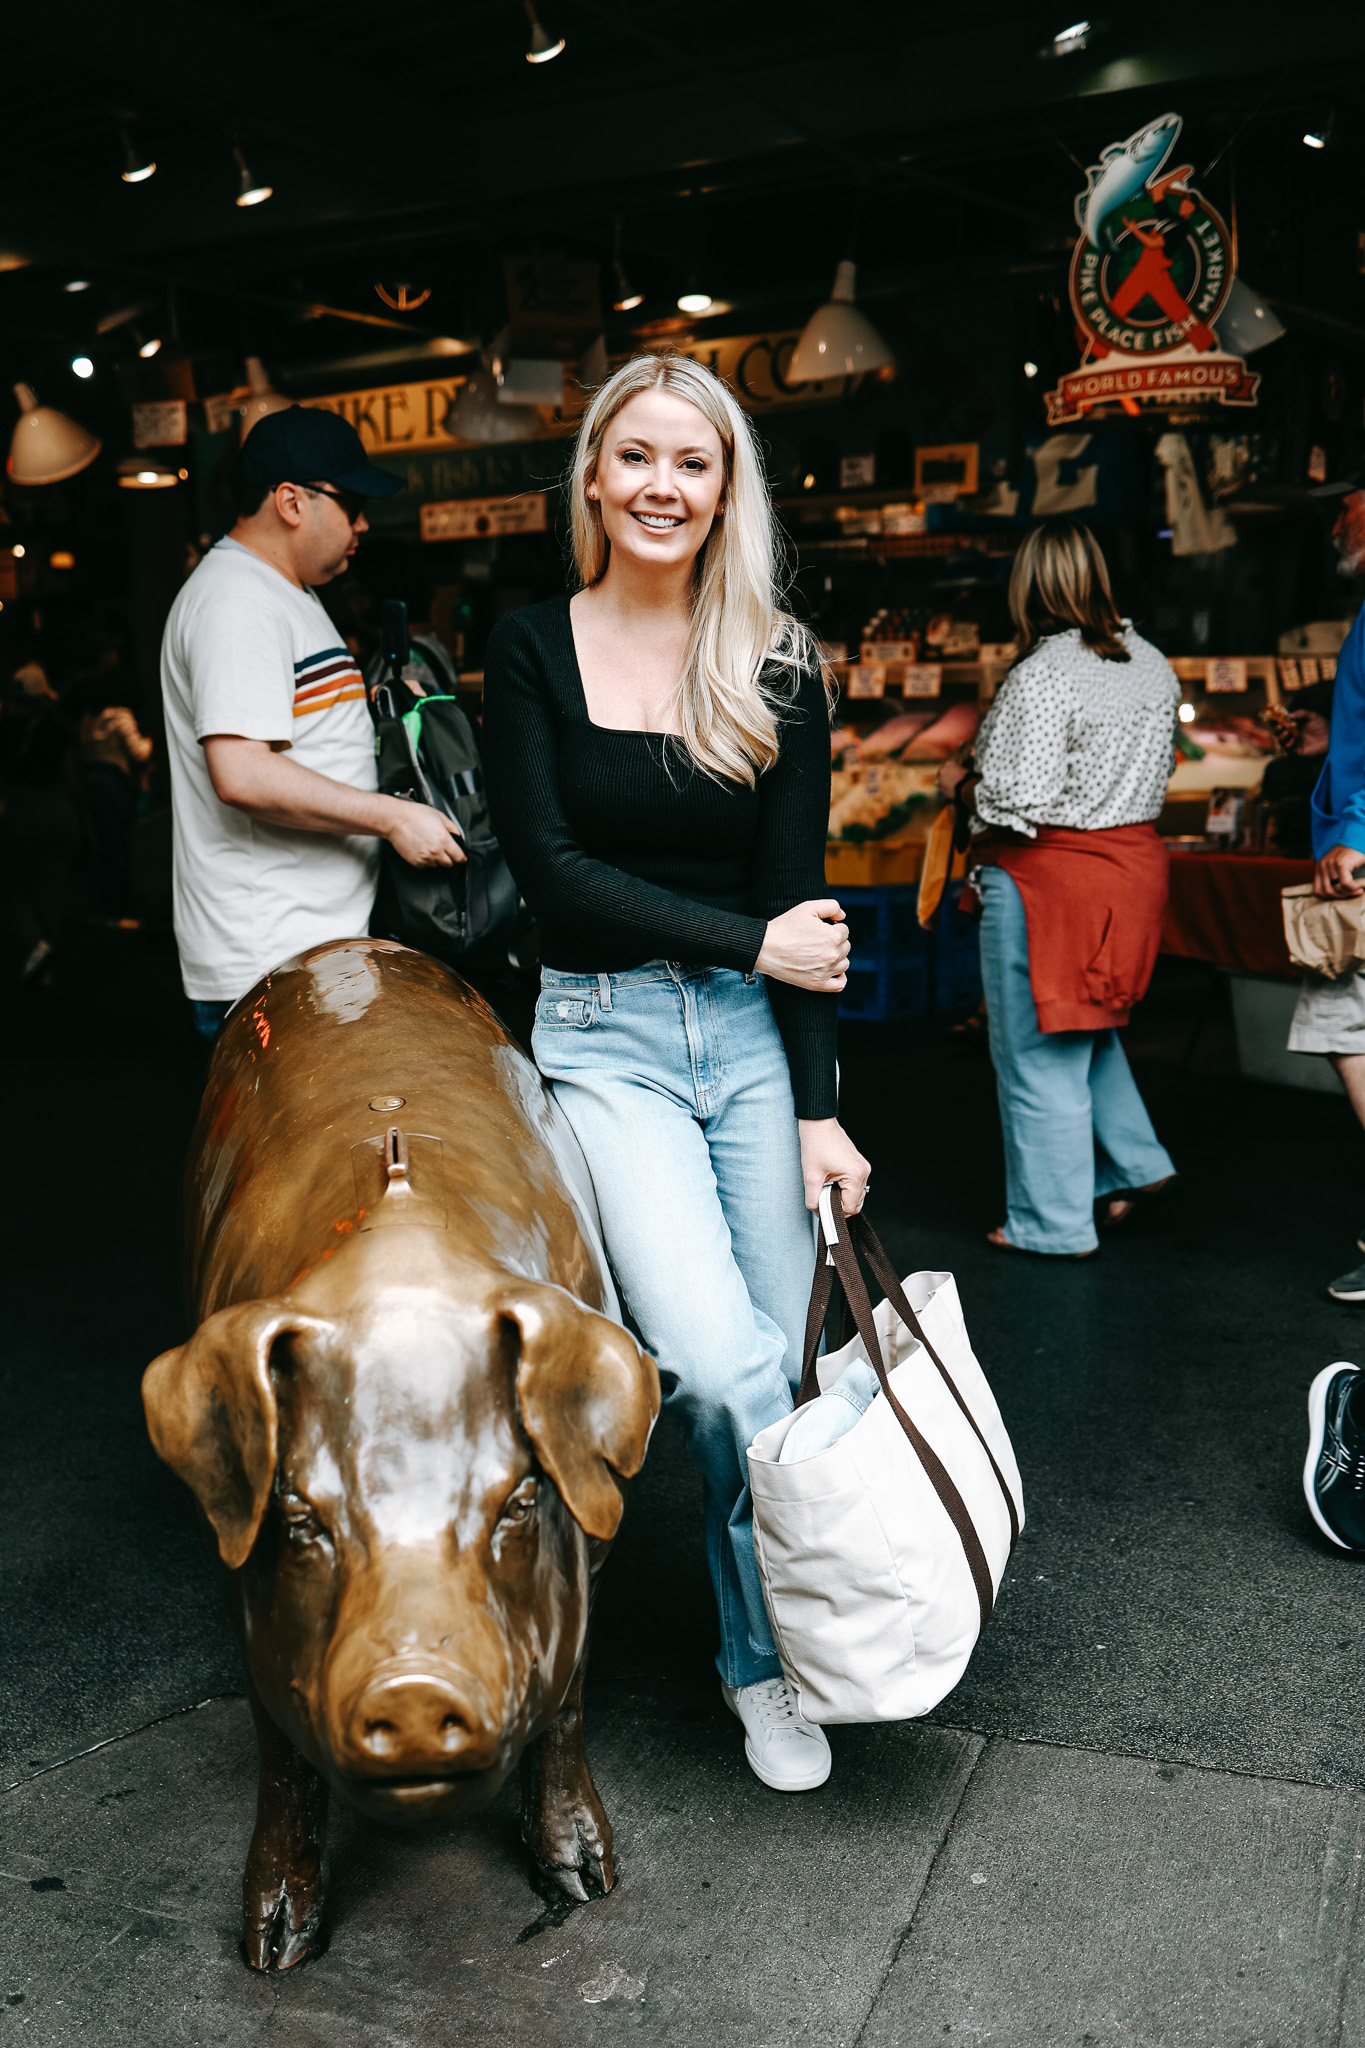 Rachel The Pig: The Original Pike Place Market Mascot